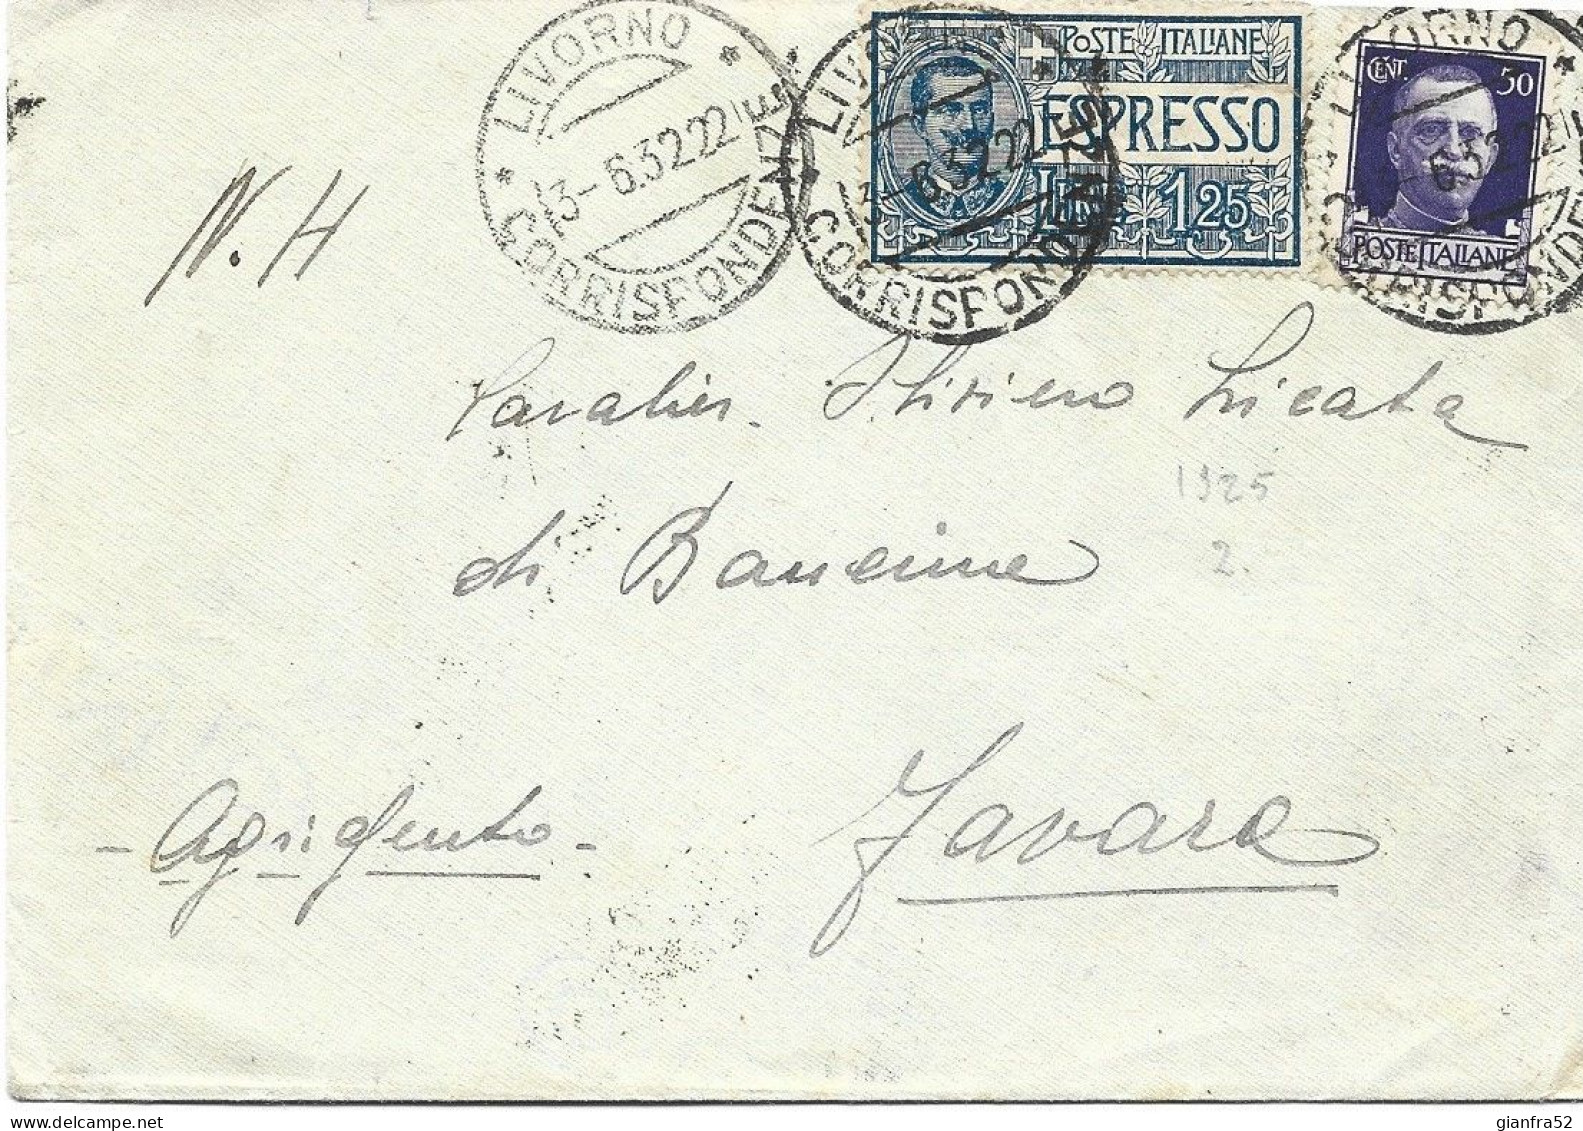 STORIA POSTALE 3/6/32 LETTERA ESPRESSO LIT 1,75 CENT. 50 IMPERIALE + EX 1,25 NATANTE NAPOLI-PALERMO + BOLLI VARI - Express Mail